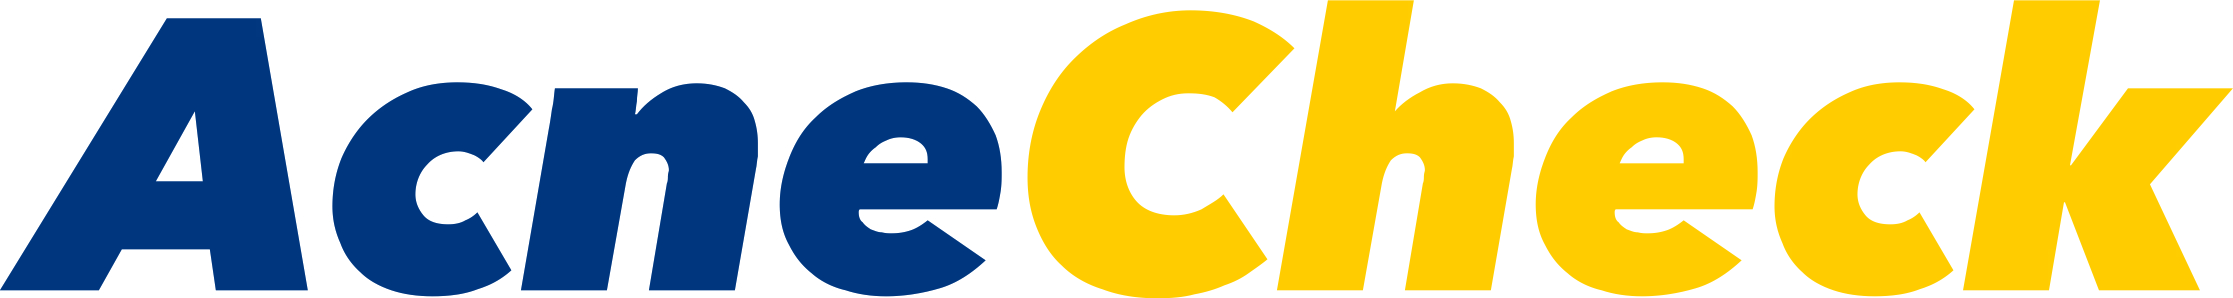 Acne Check logo